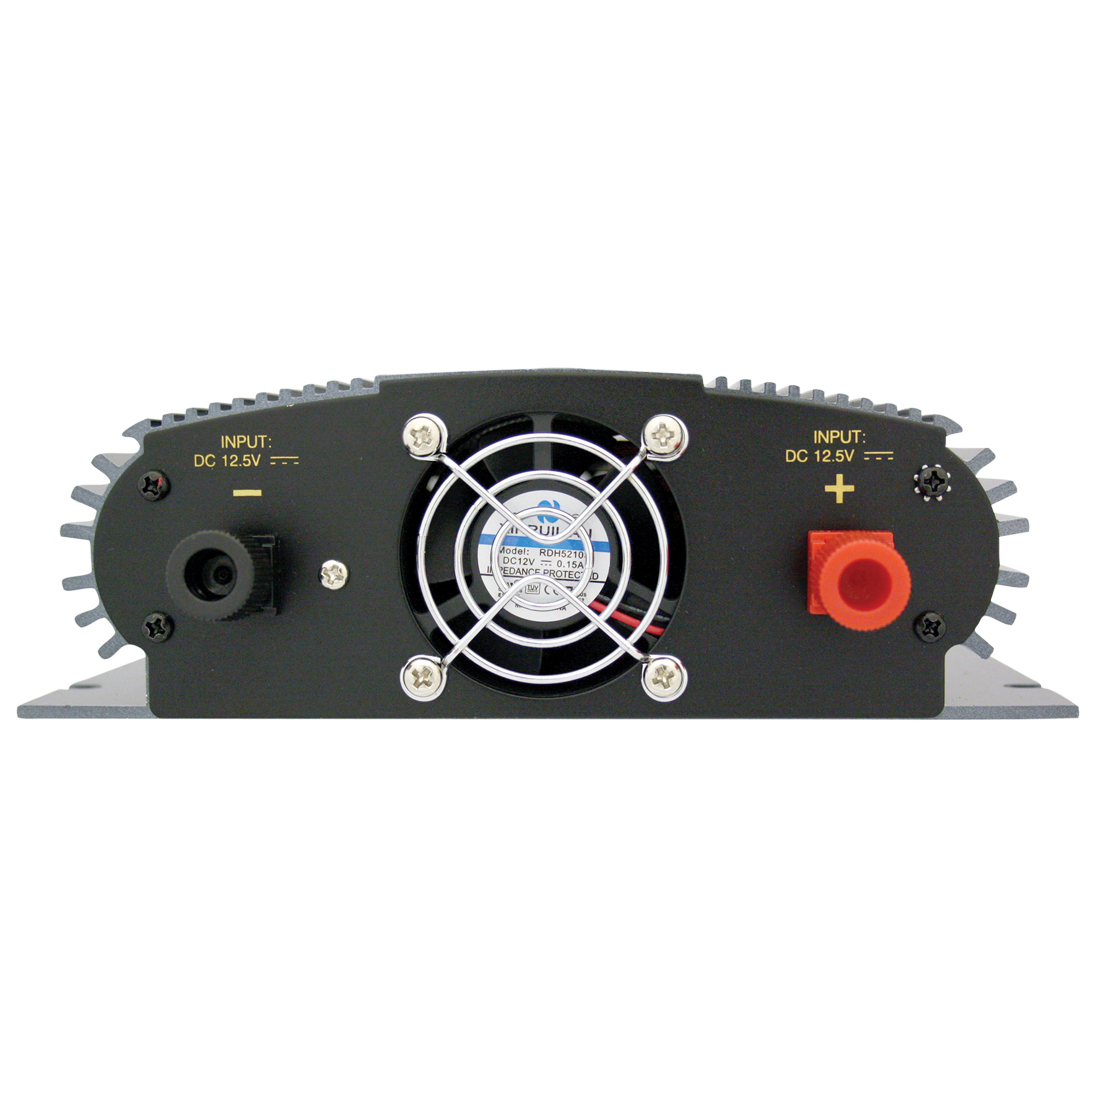 SAM-800-12   Samlex 800W Modified Sine Wave Inverter 12Vdc to 115Vac